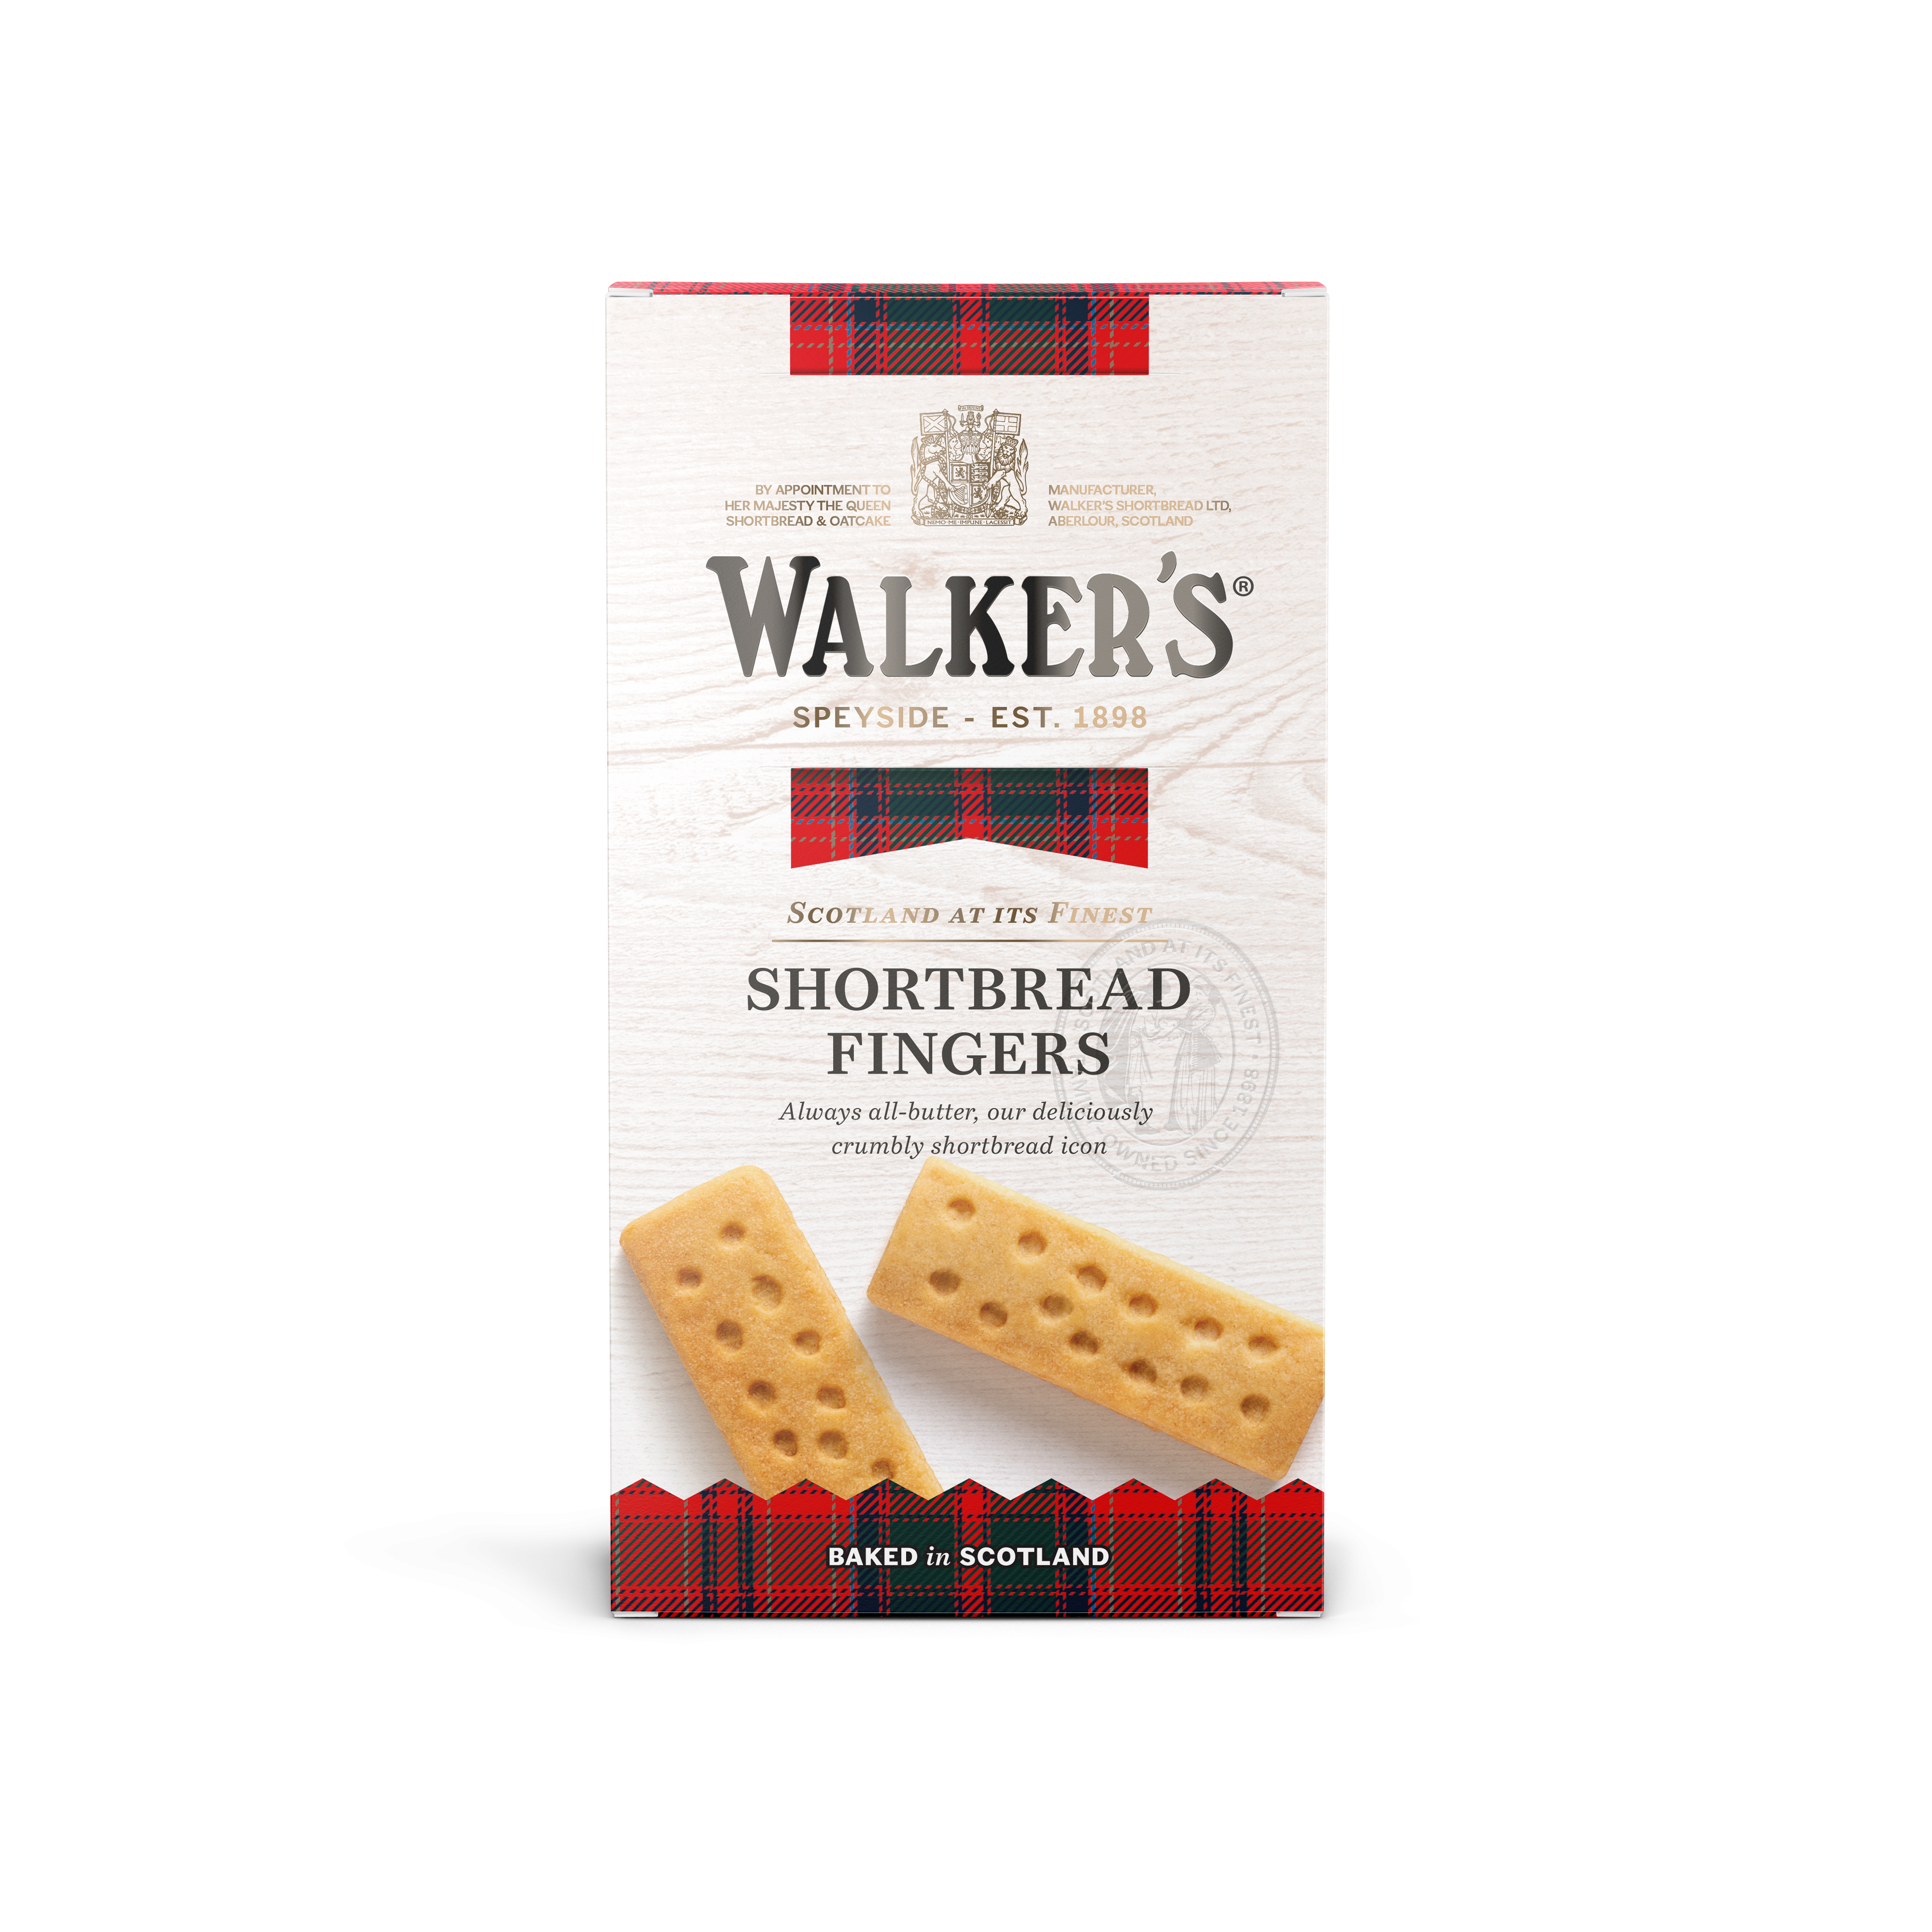 Walkers Shortbrad Shortbread fingers